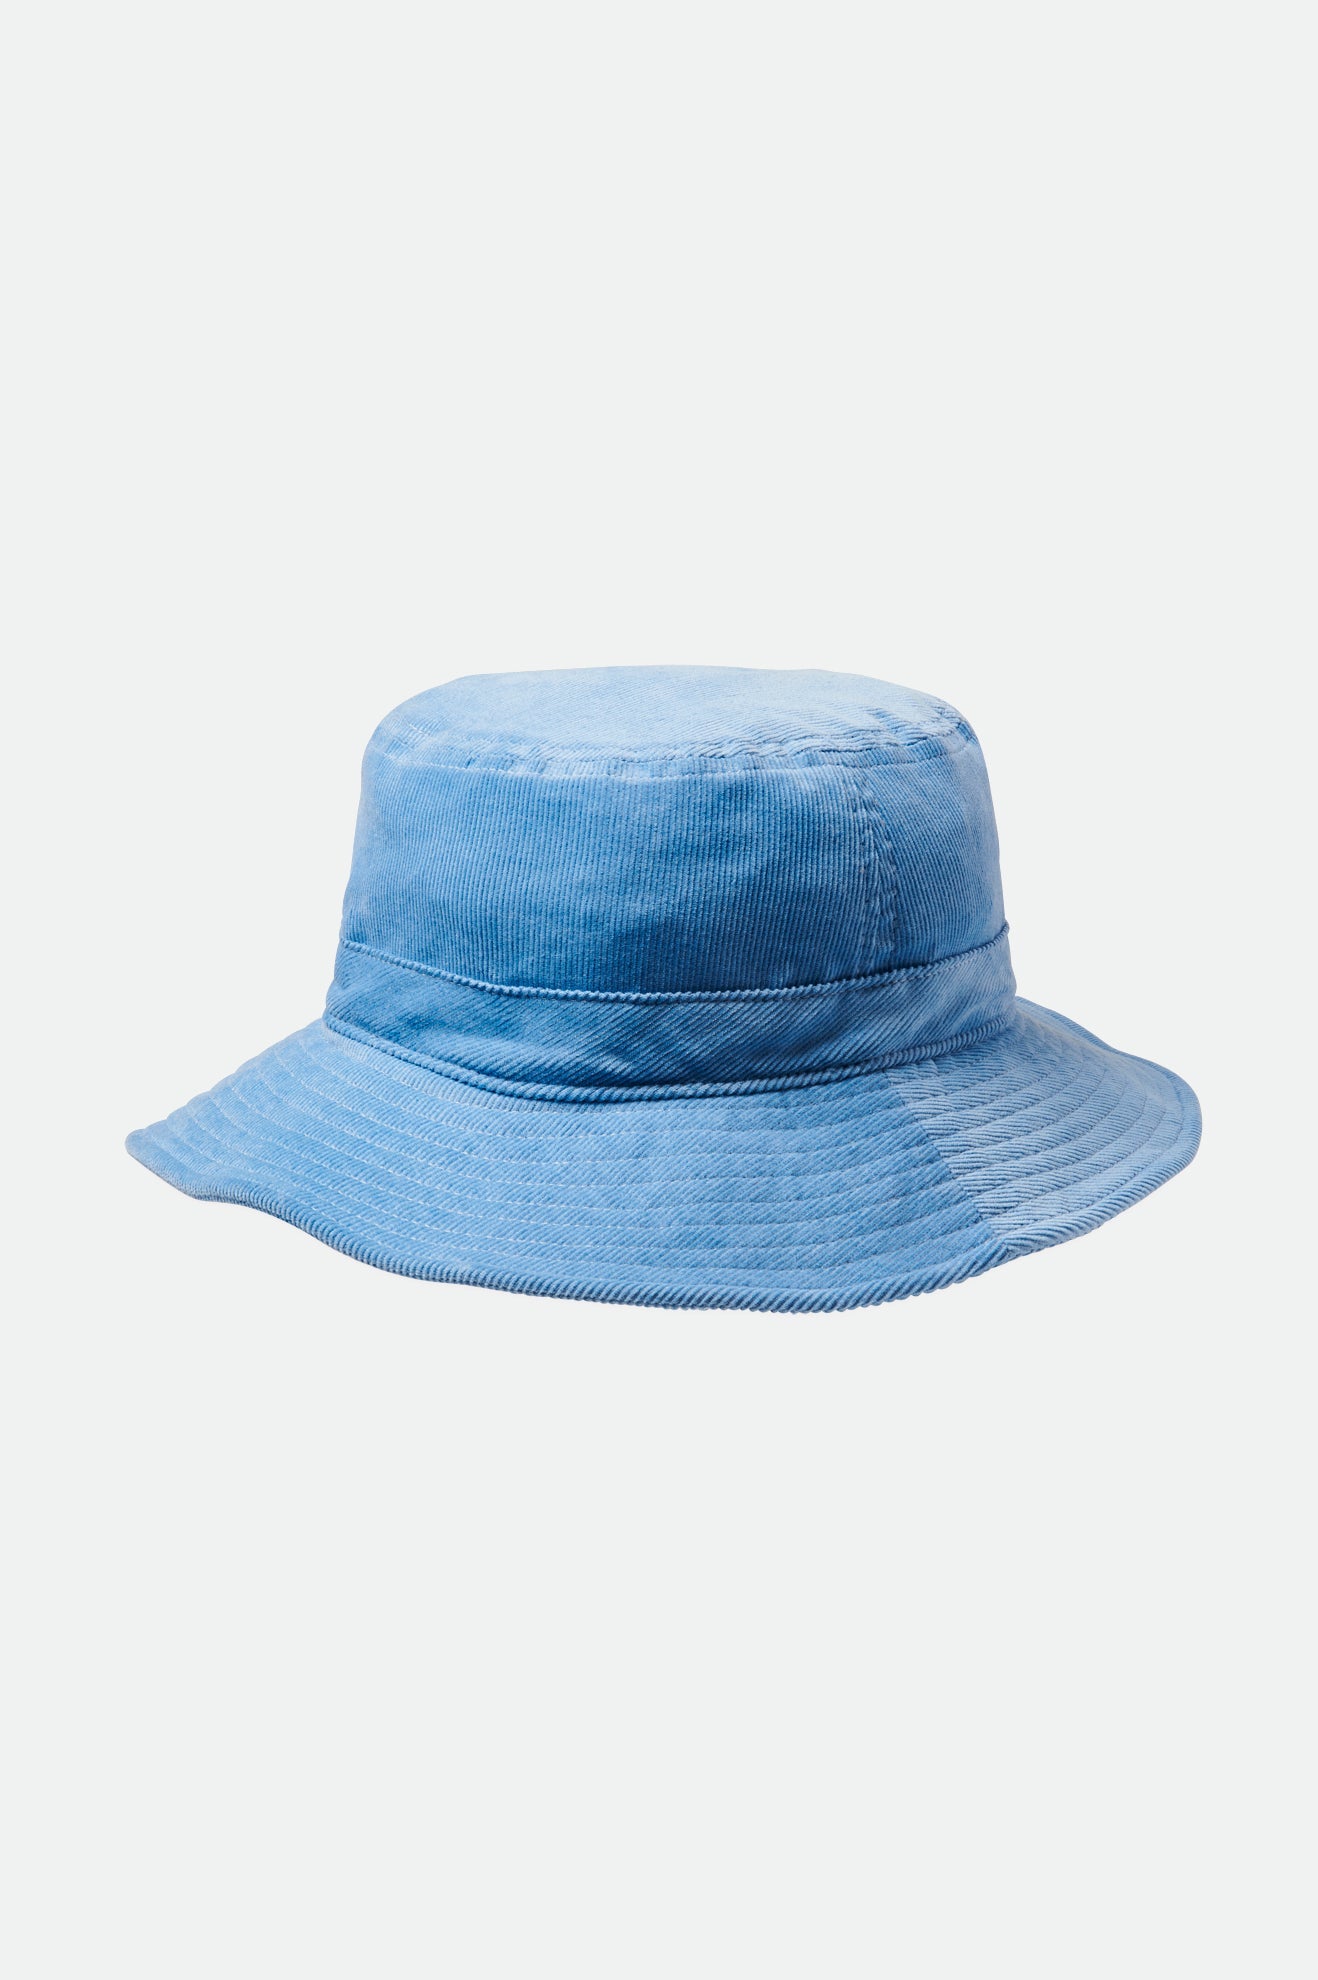 Petra Packable Bucket Hat - Casa Blanca Blue.